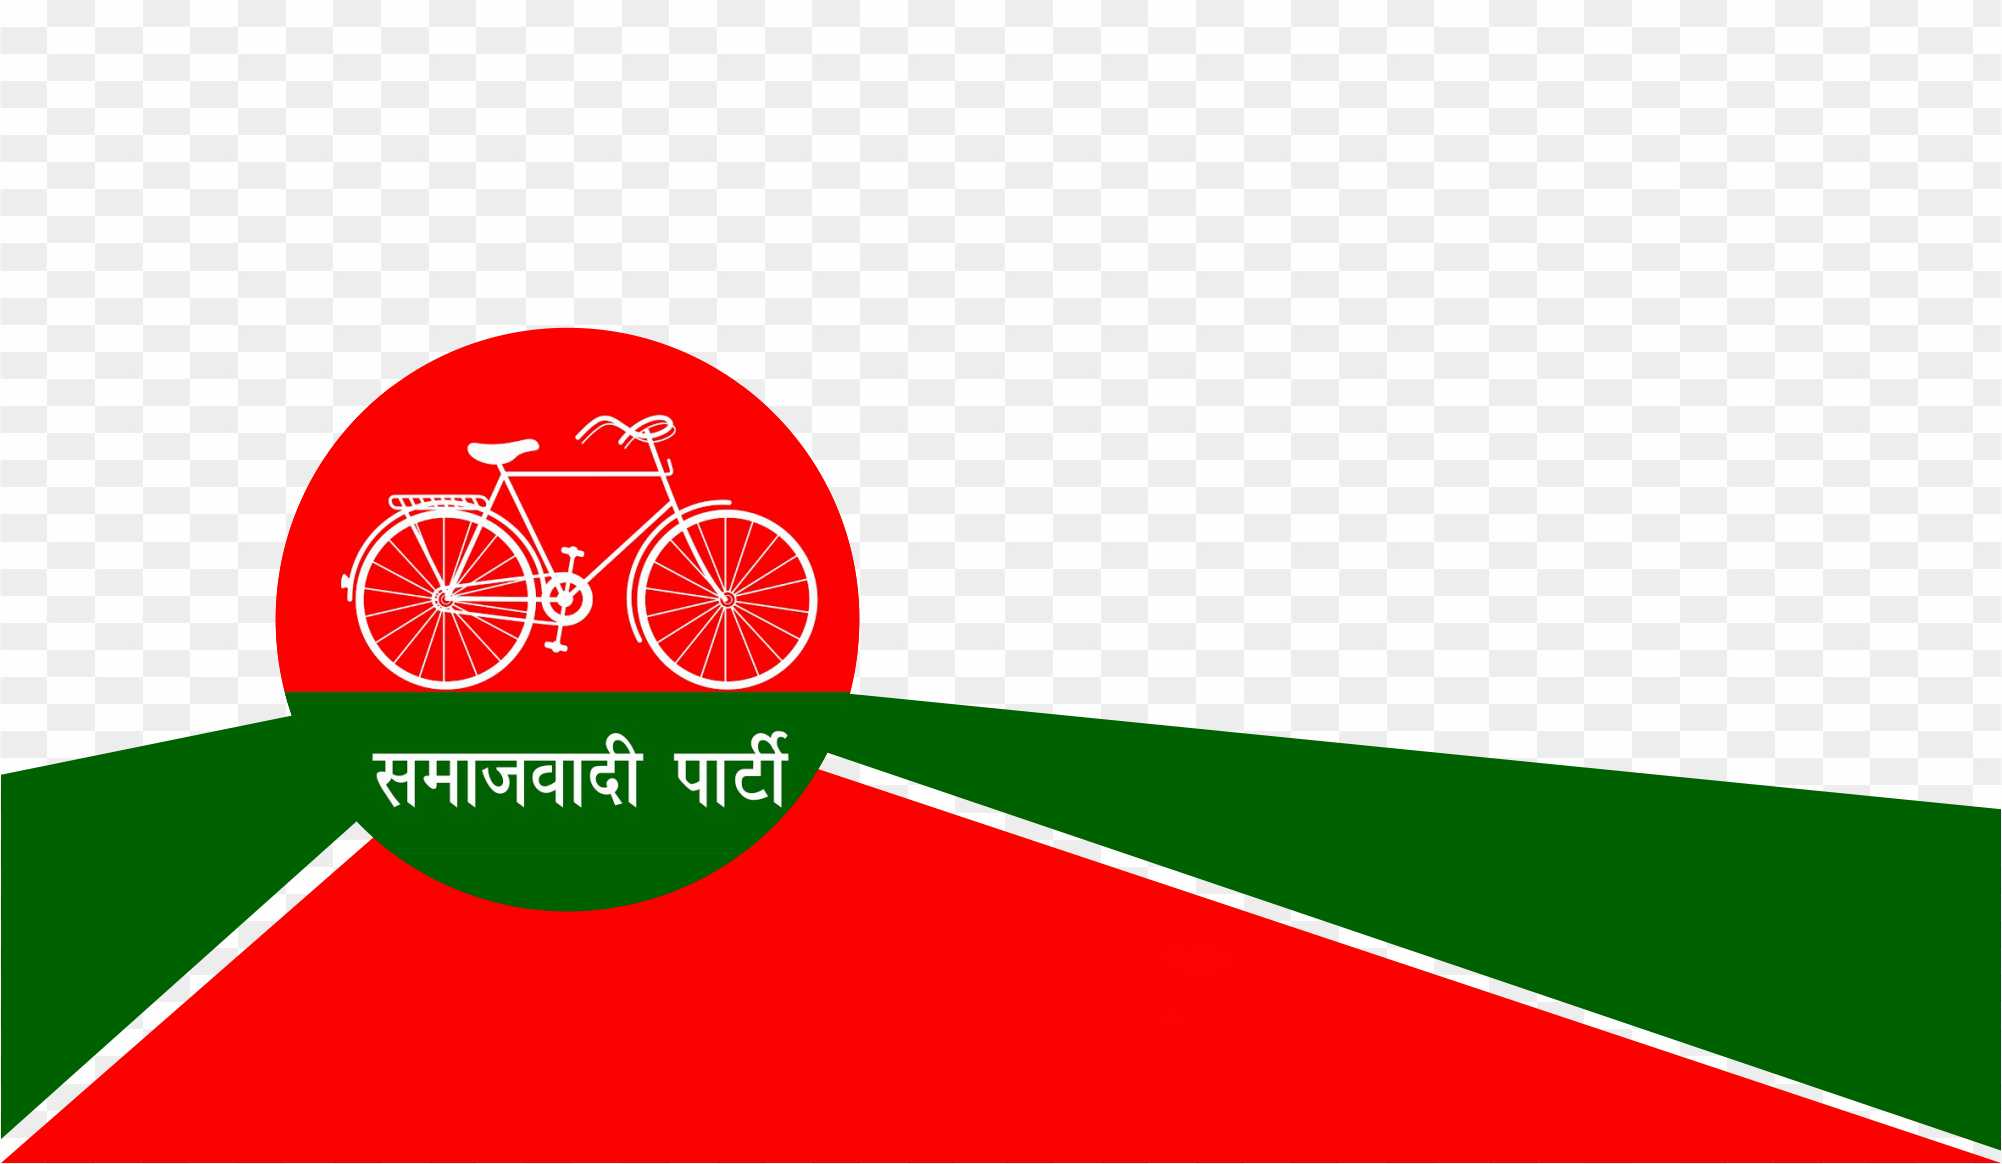 Samajwadi party poster logo footer png images 